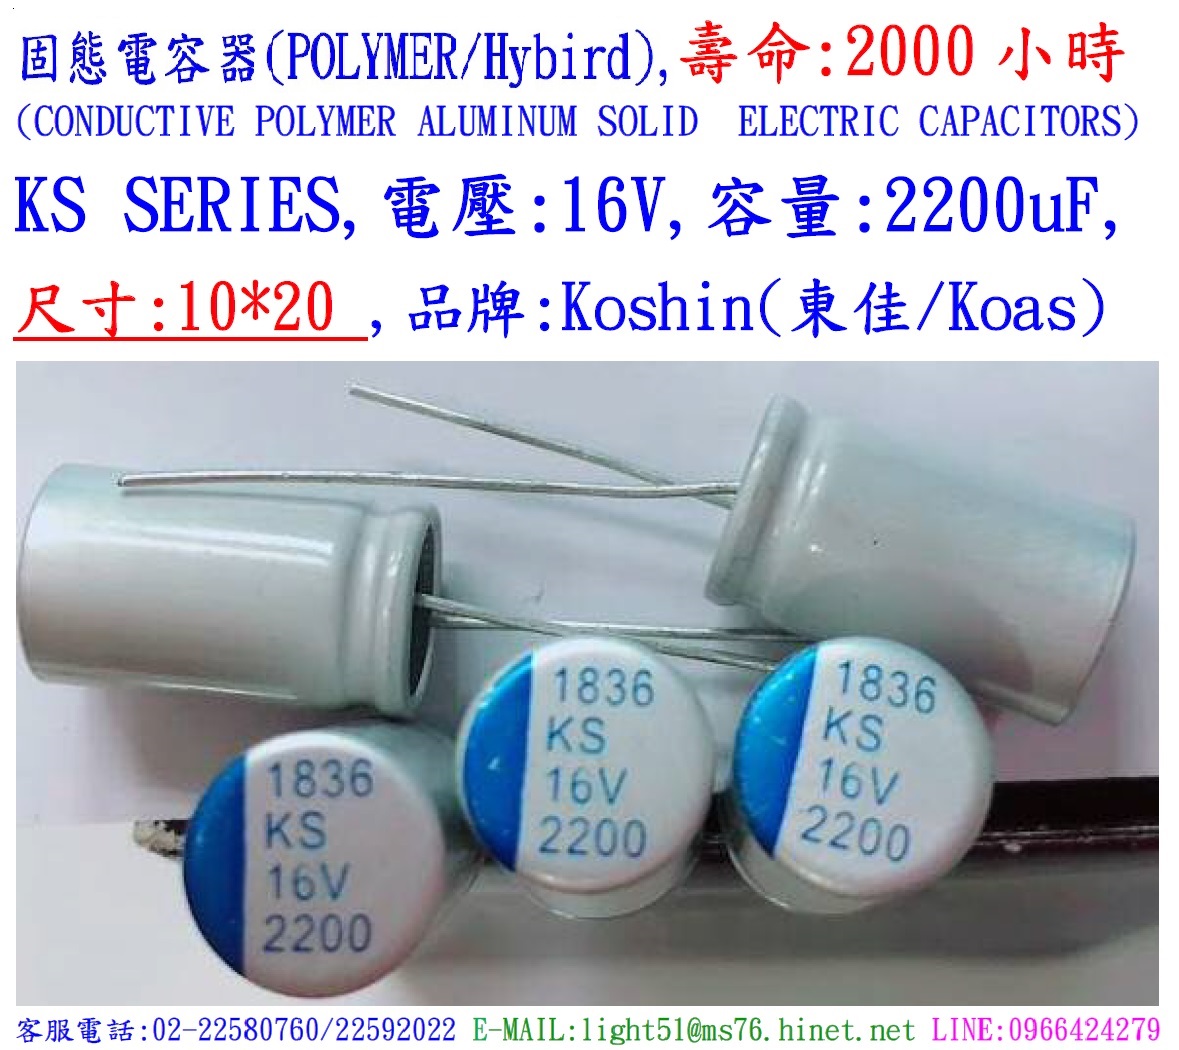 KS,16V,2200uF,尺寸:10X20,固態電容器(POLYMER/Hybird),壽命:2000小時,KOSHIN(東佳)